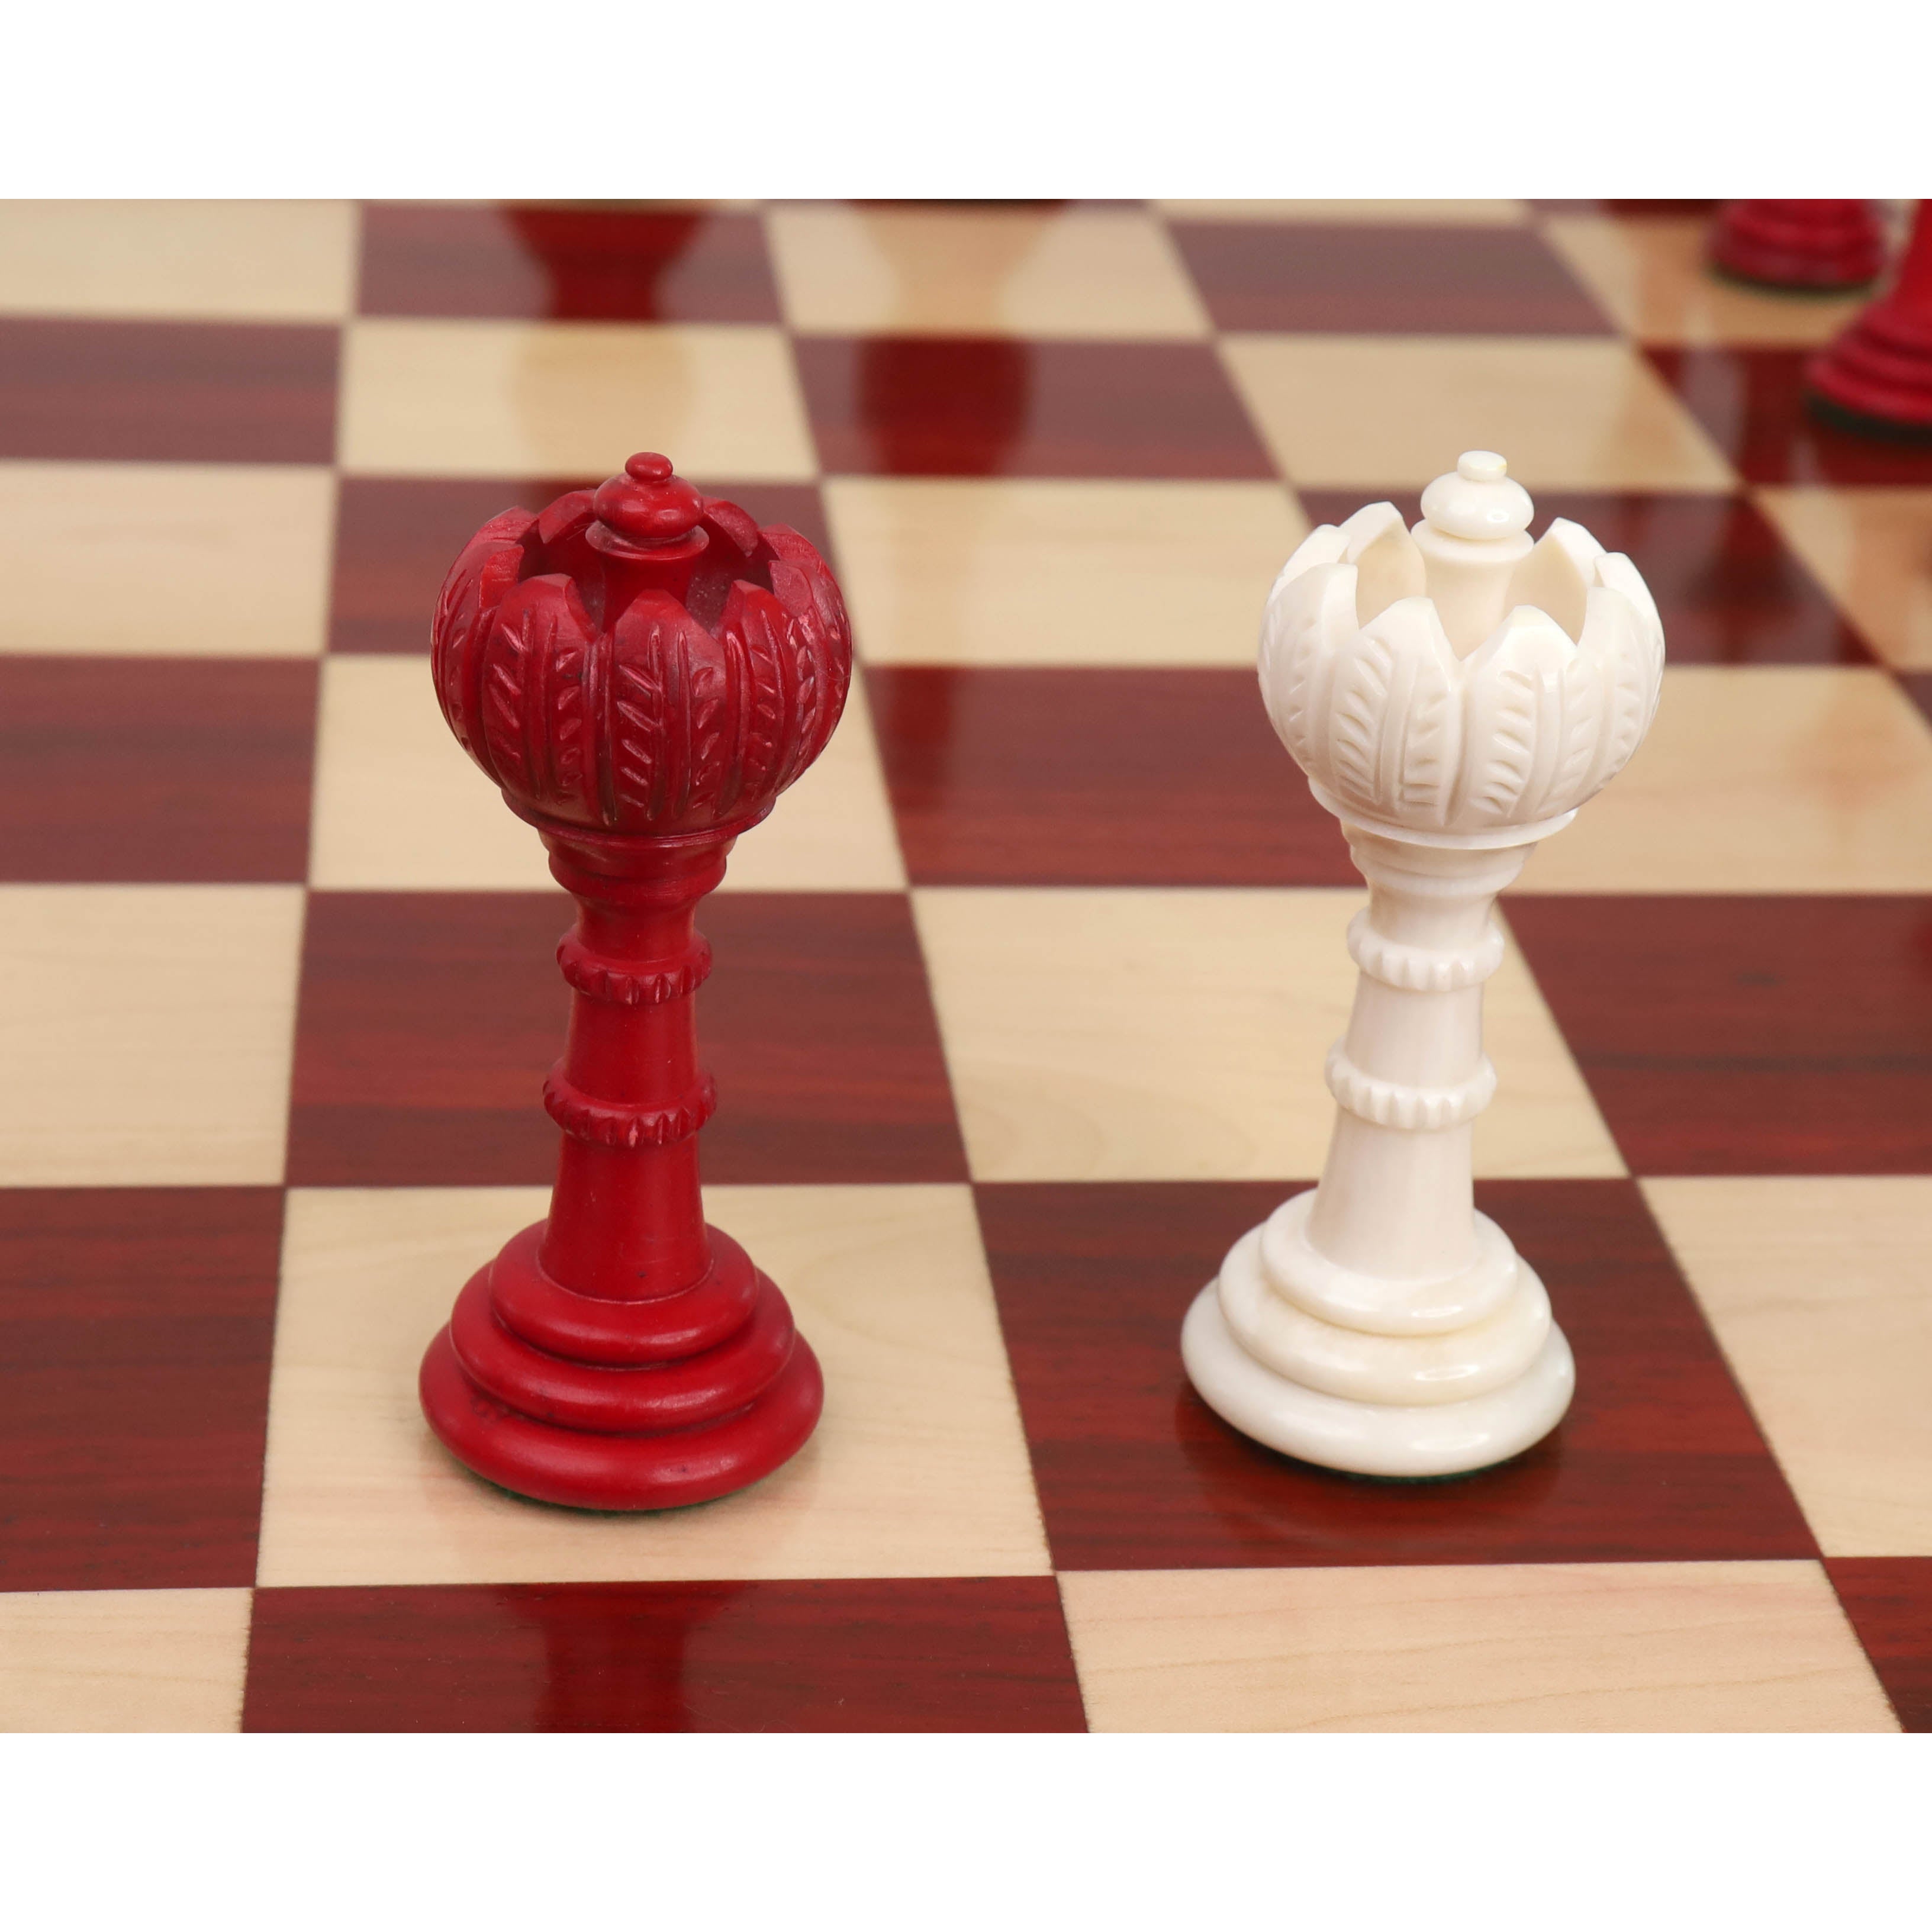 4.6″ Turkish Tower Pre-Staunton Chess Set- Chess Pieces Only-Crimson & White Camel Bone